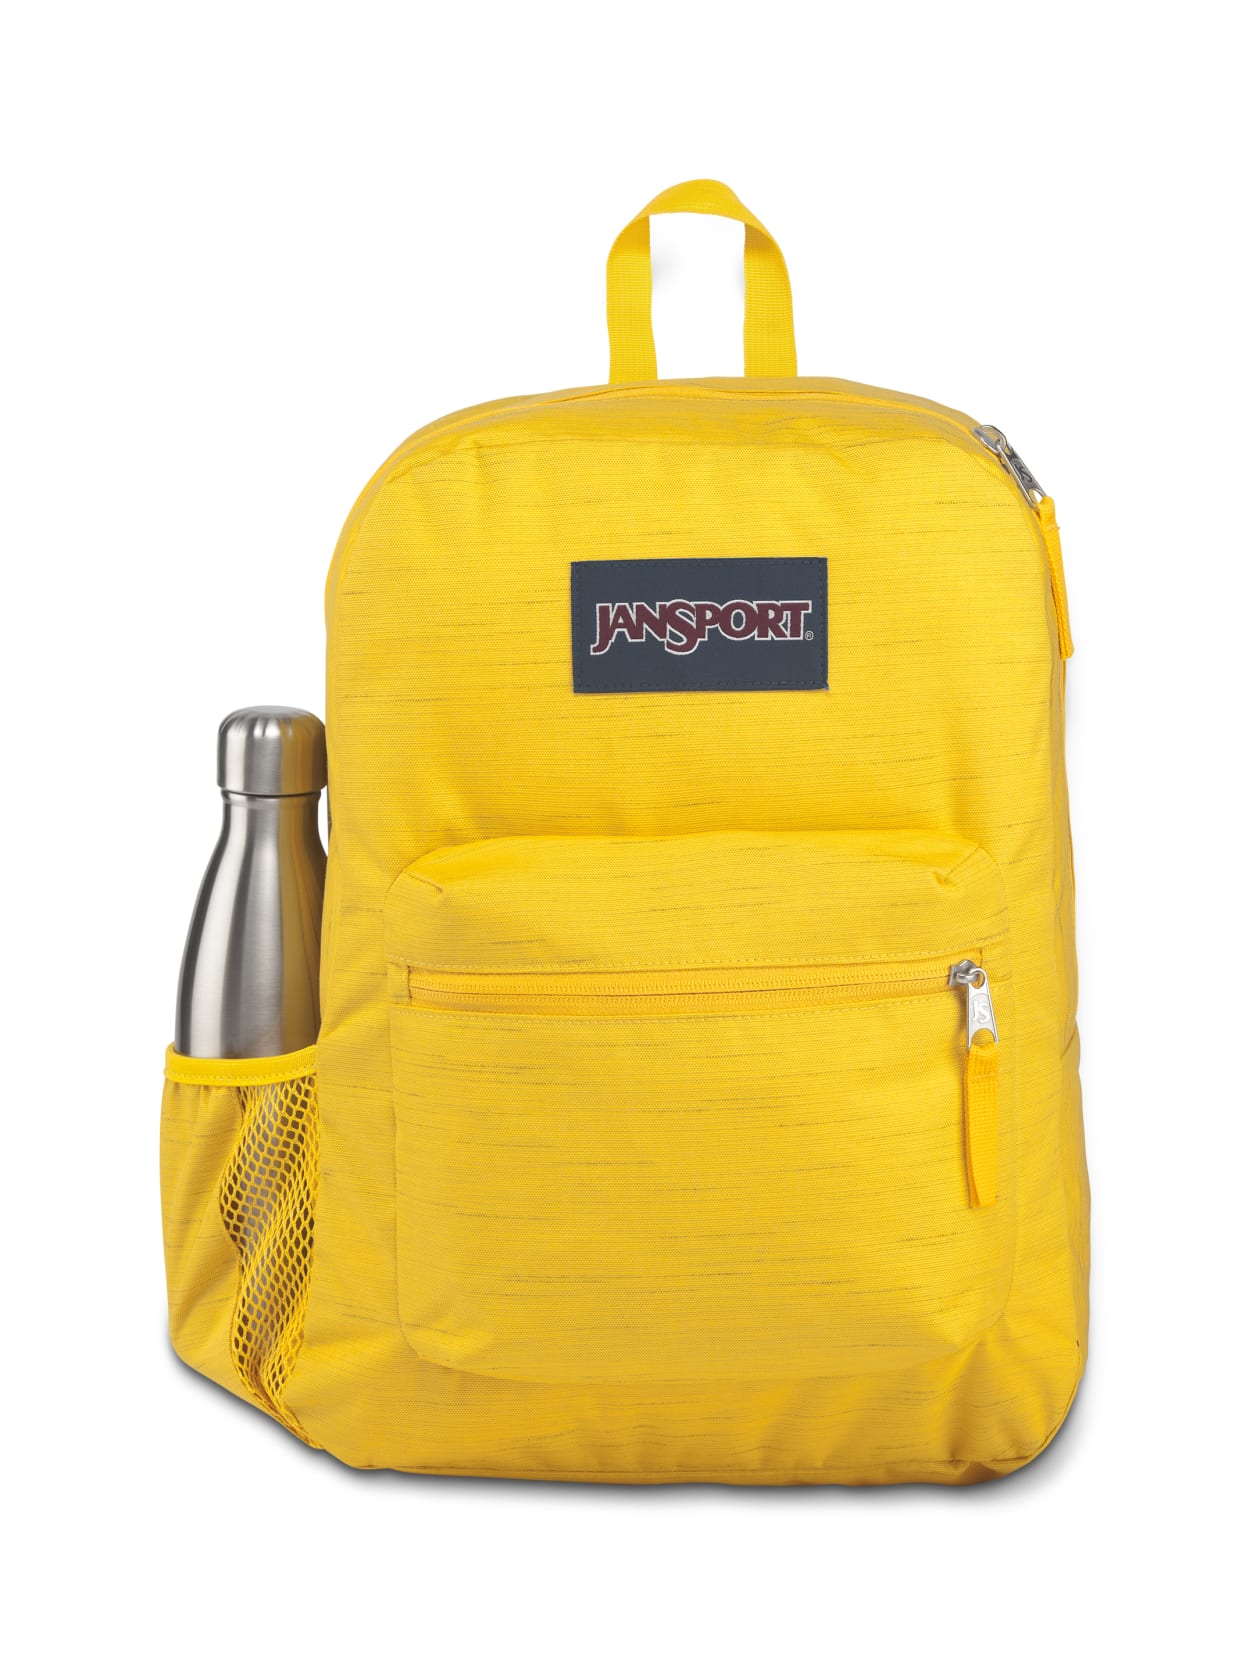 jansport water resistant backpack